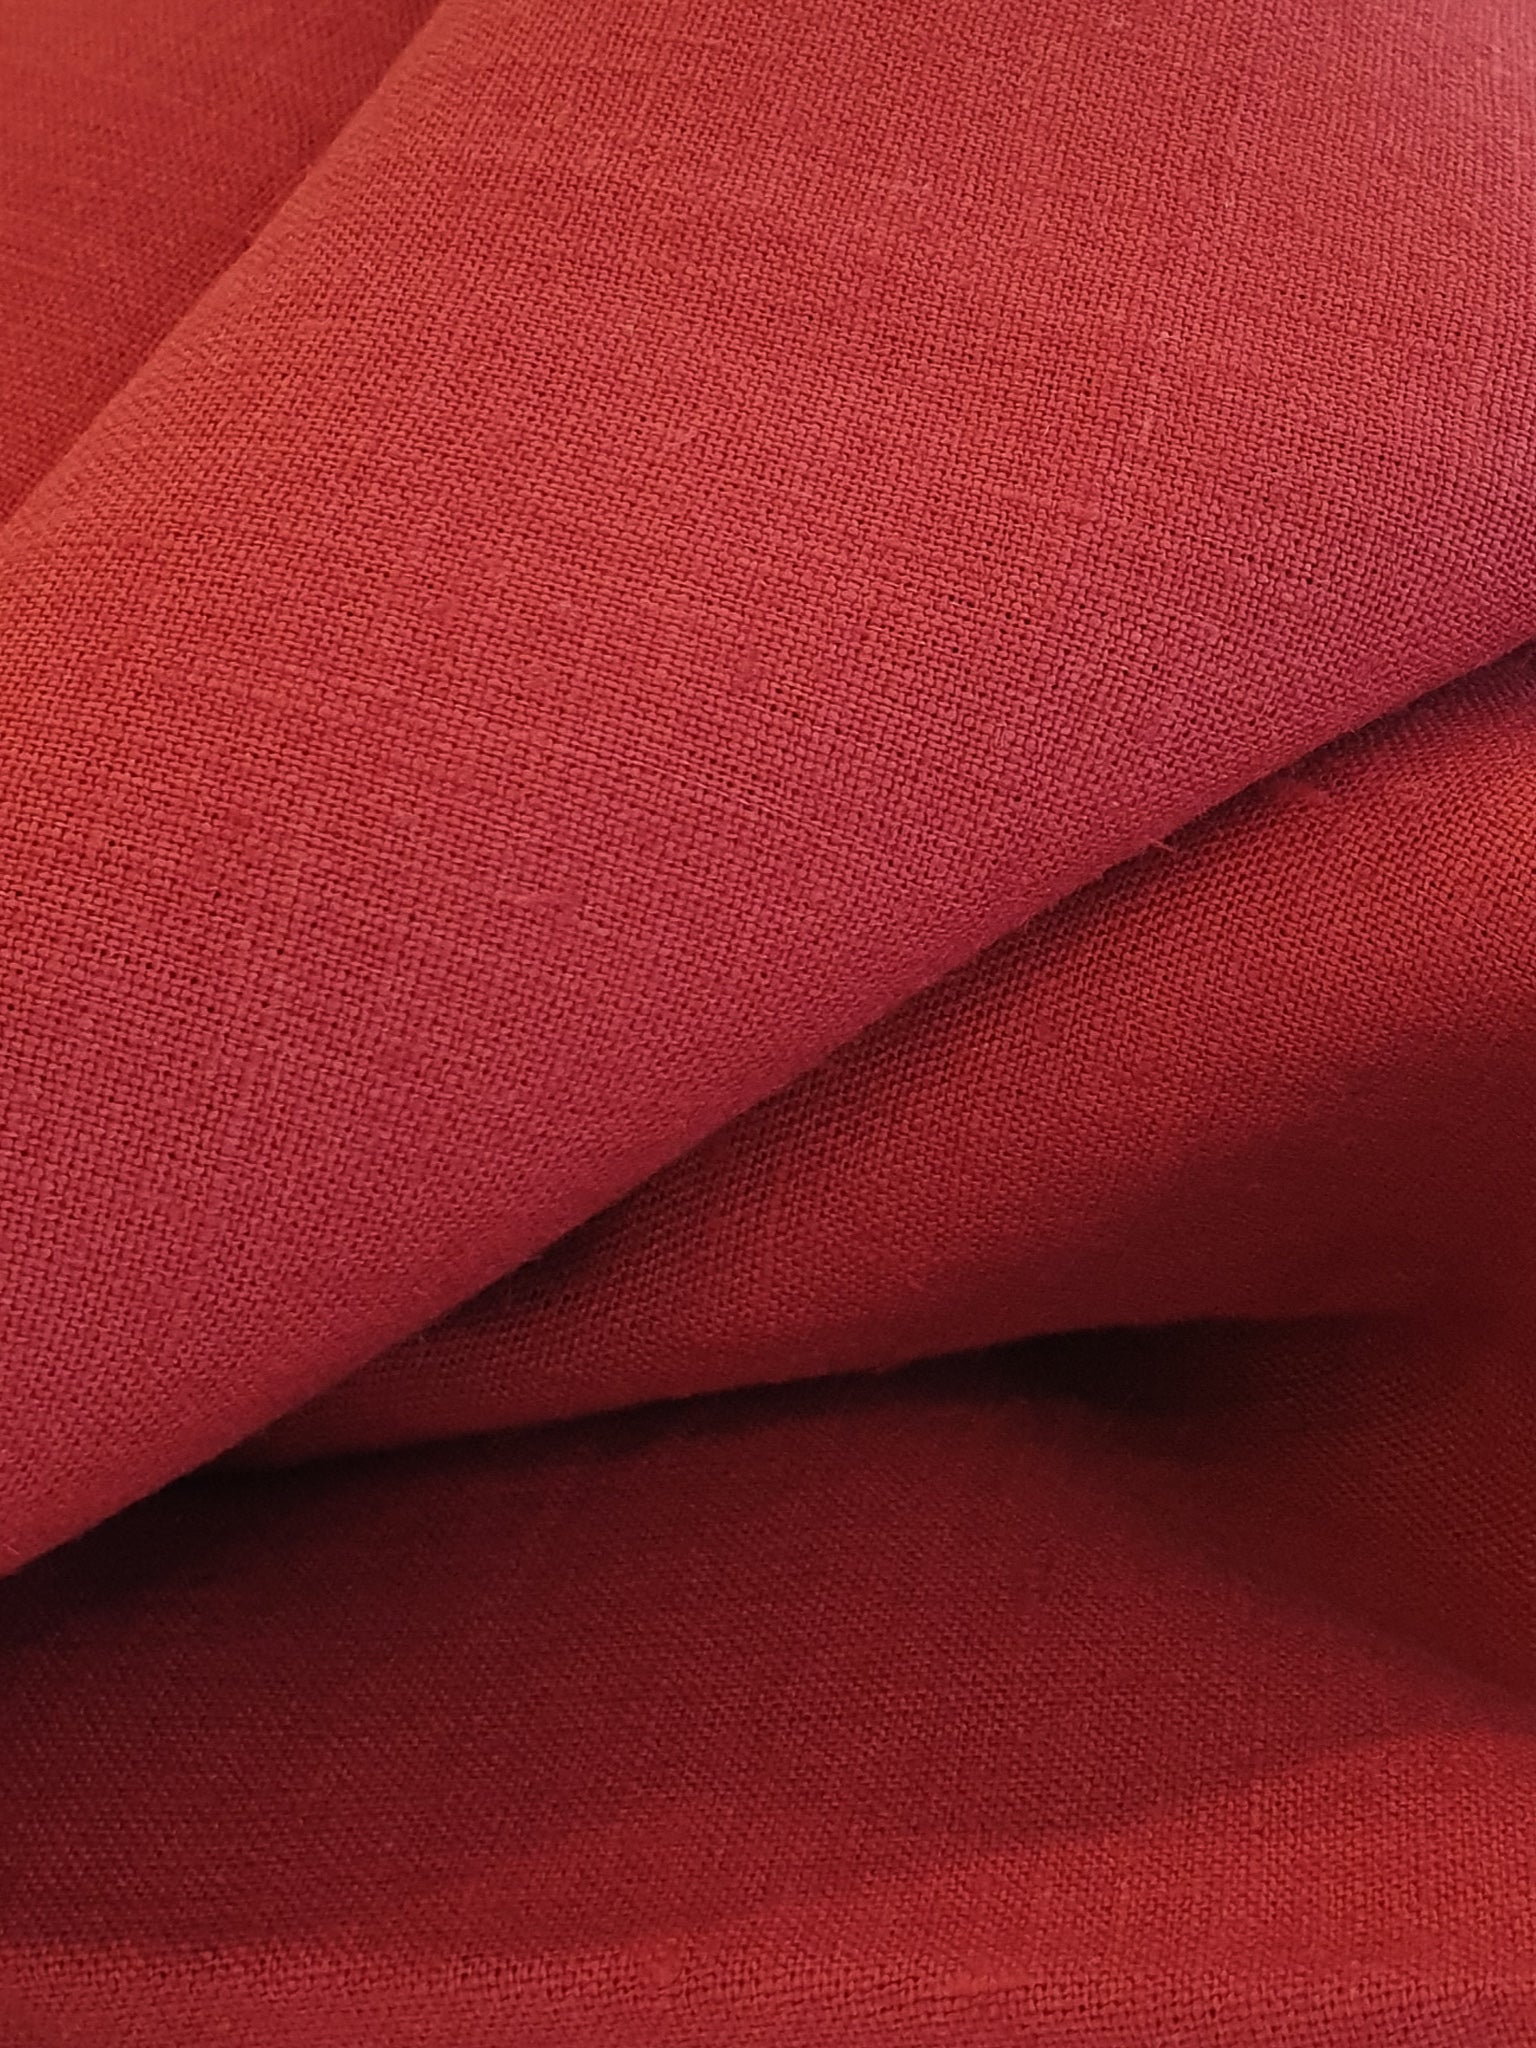 No. 382 linen fabric dark red